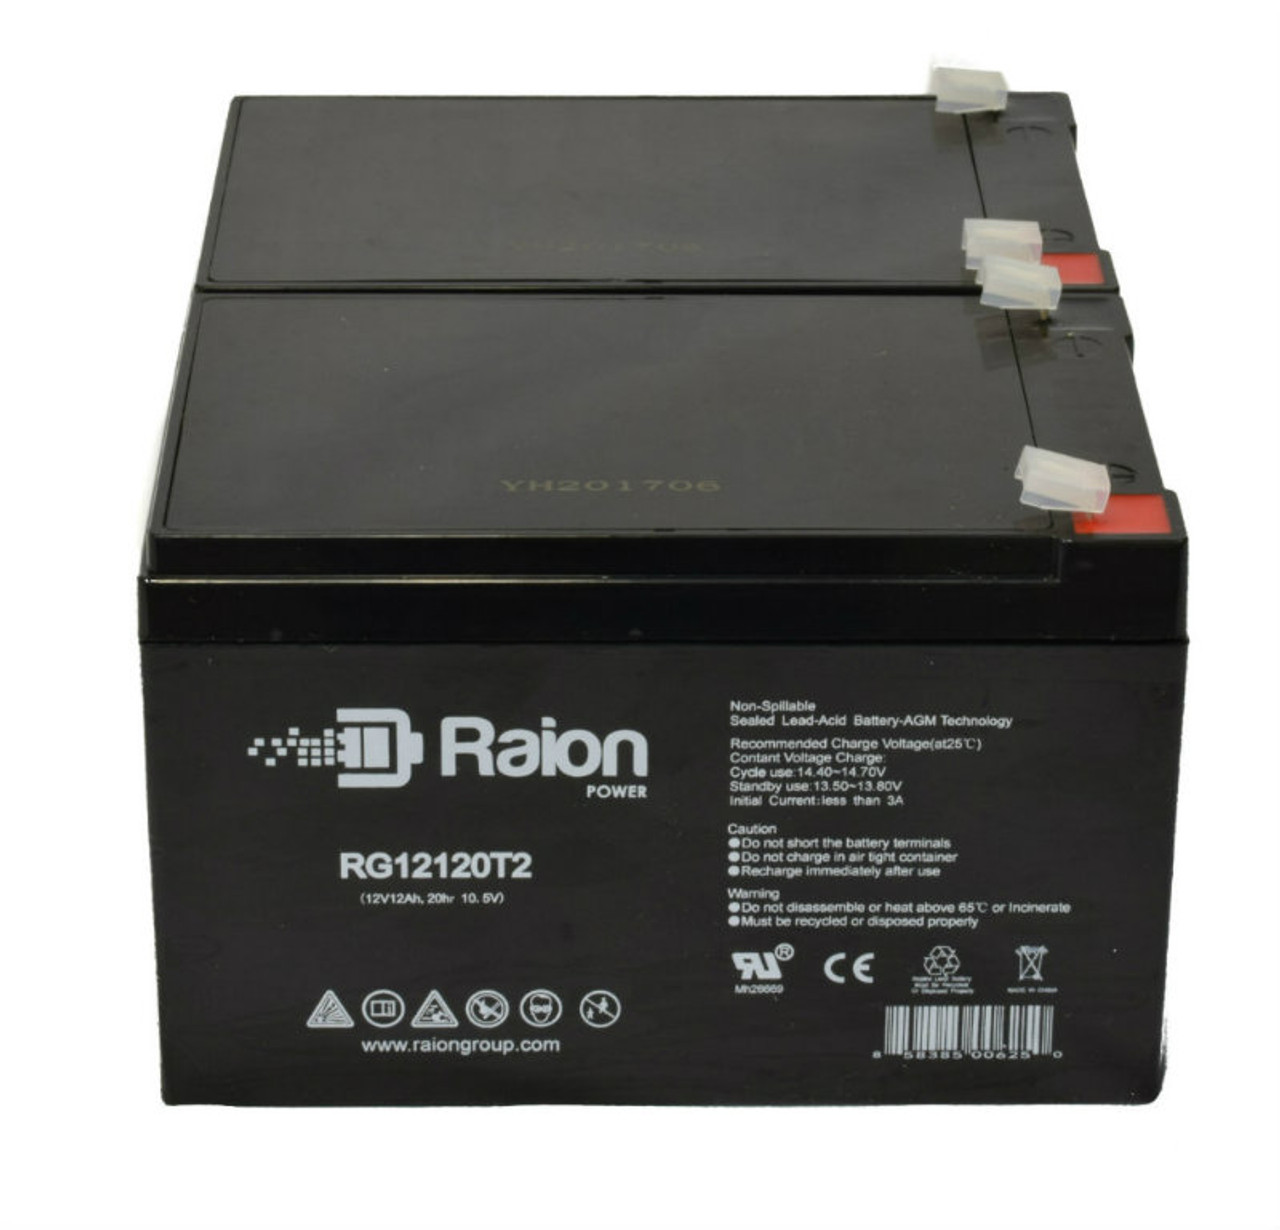 Raion Power 12V 12Ah Non-Spillable Compatible Replacement Battery for Valen X-CEL 12 VX 14 - (2 Pack)